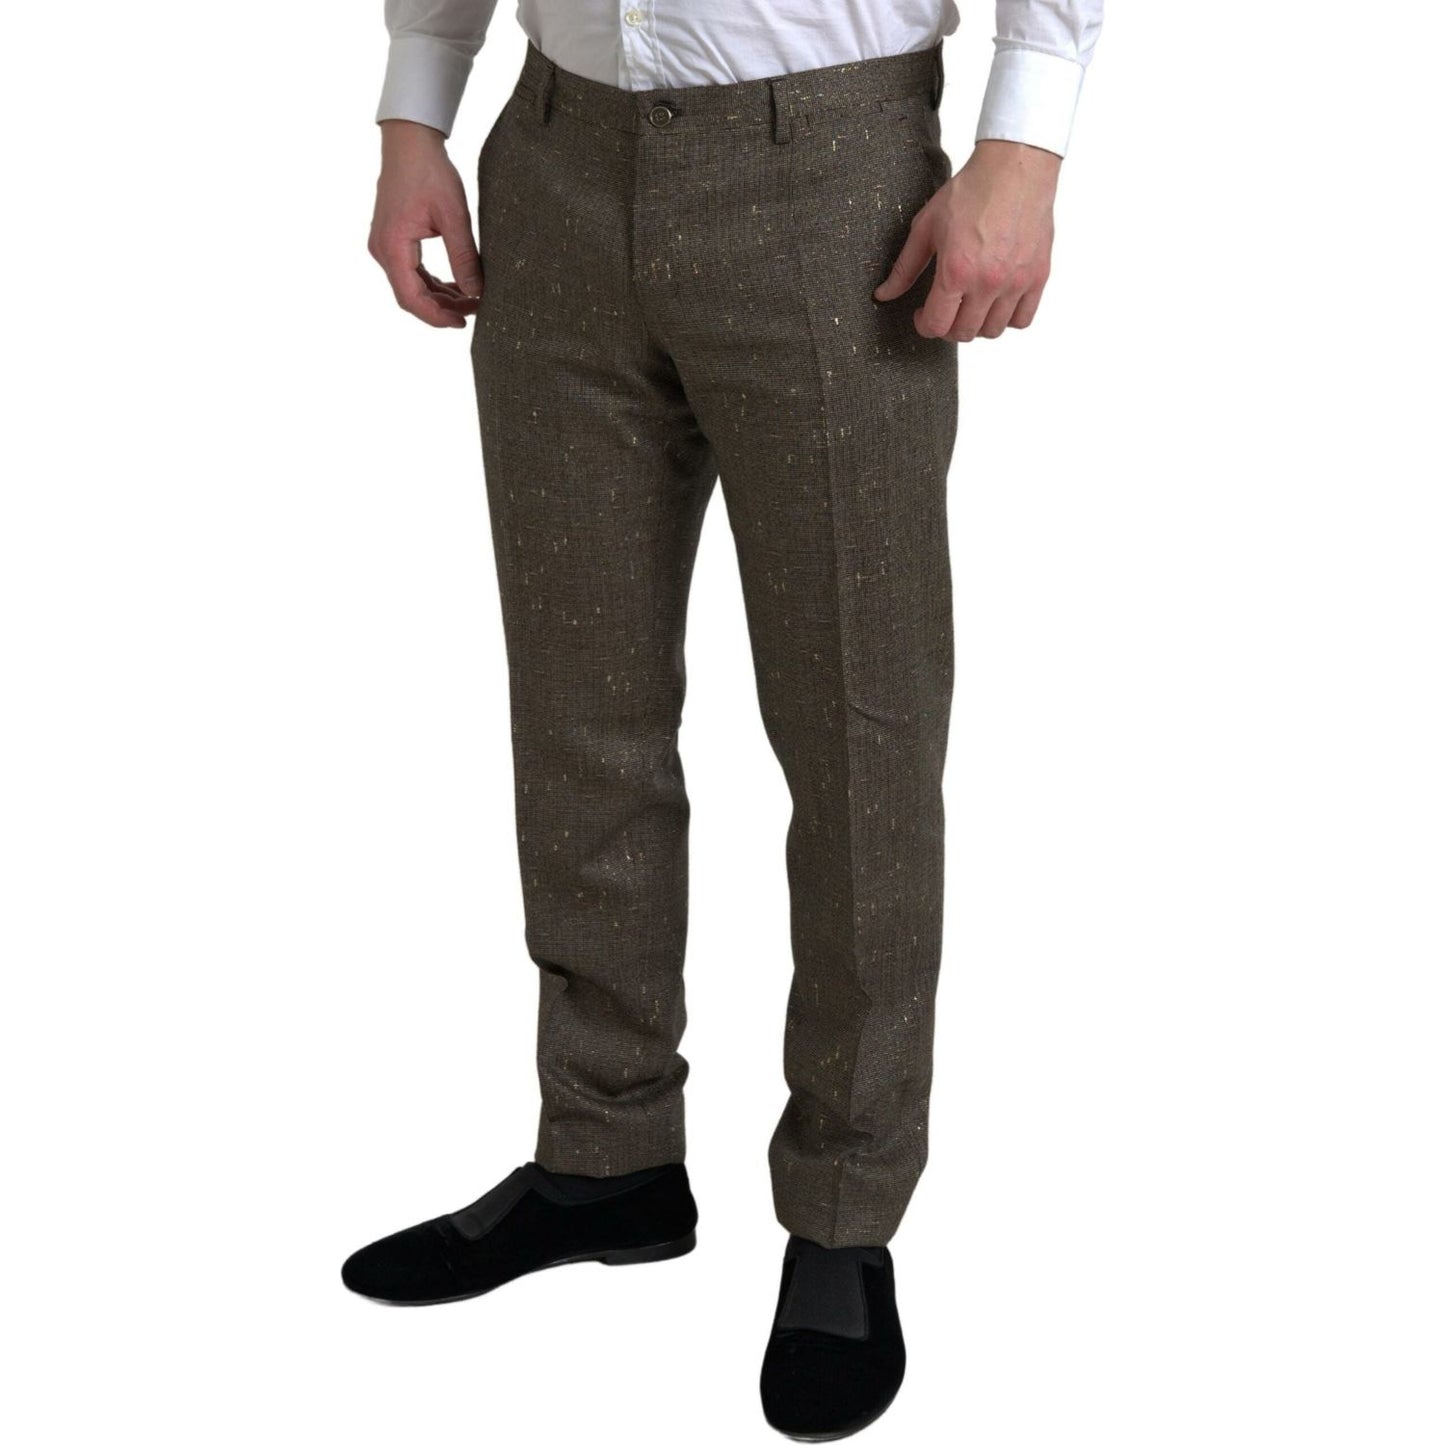 Dolce & Gabbana Elegant Skinny Wool Chino Pants brown-wool-dress-skinny-men-trouser-pants